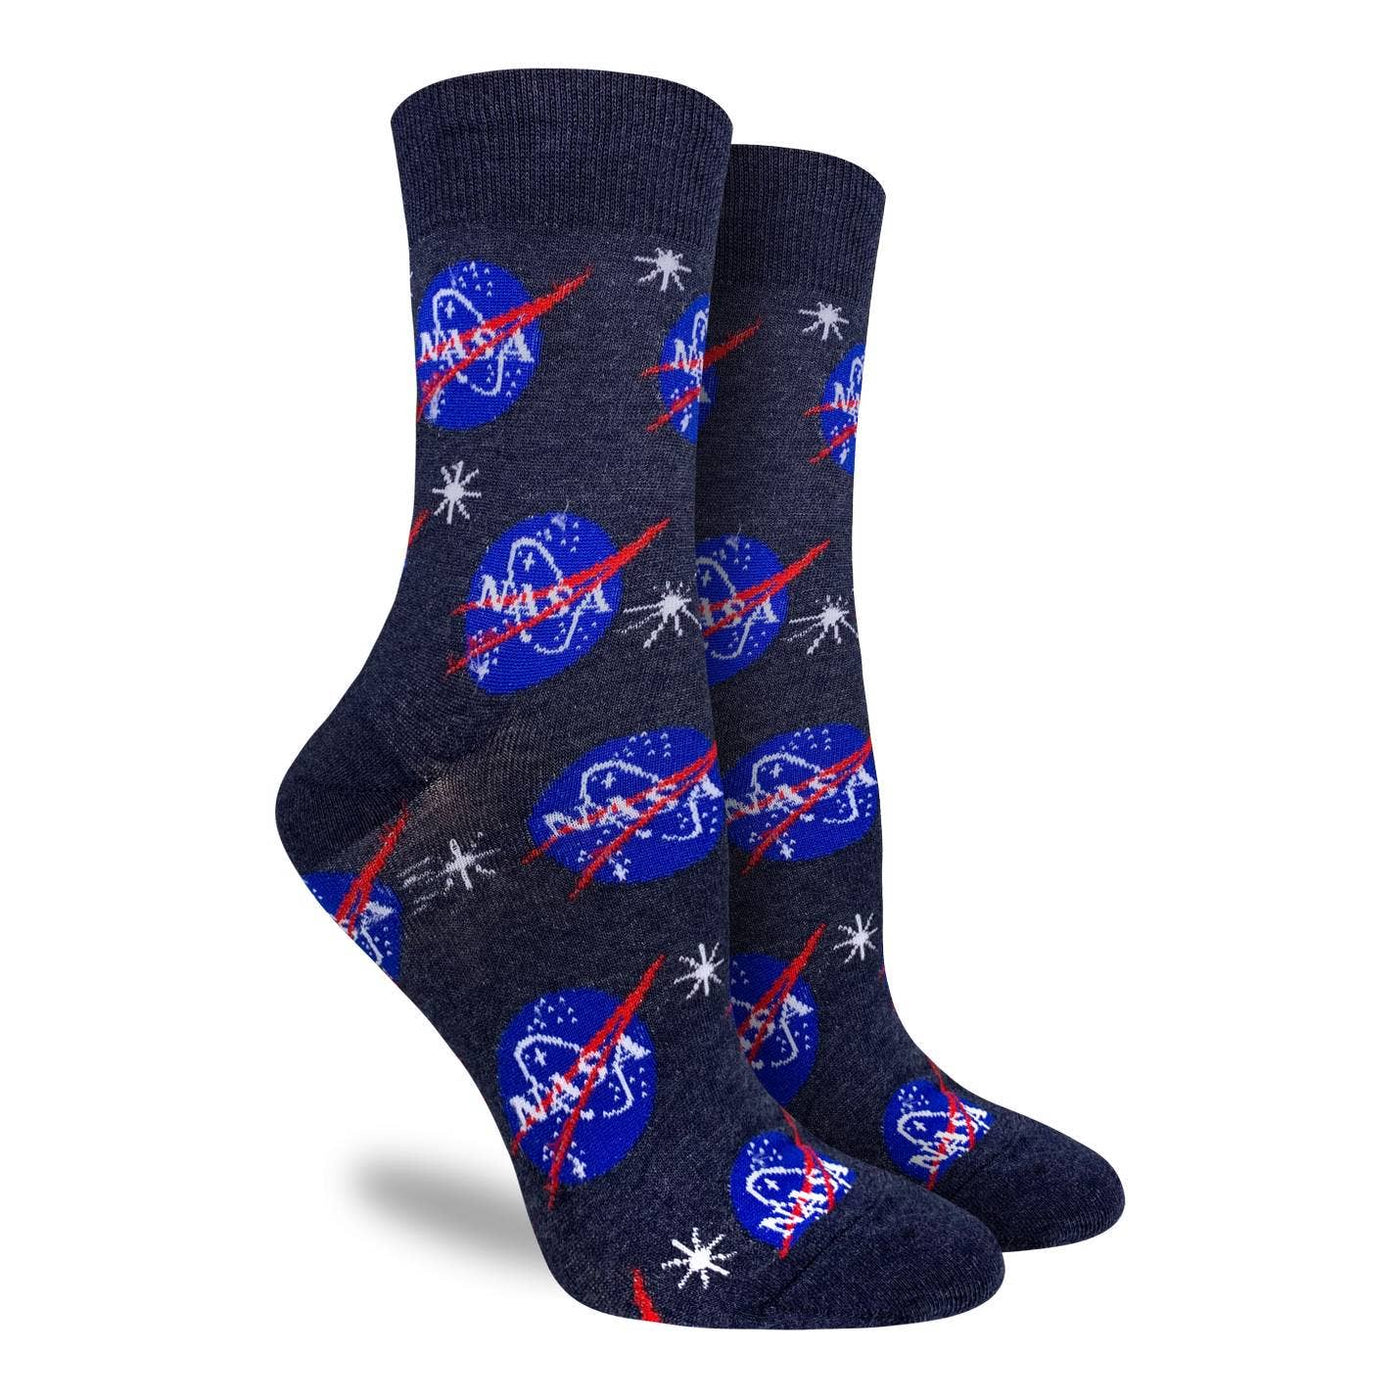 Women's Nasa, Blue Socks - Size 5-9